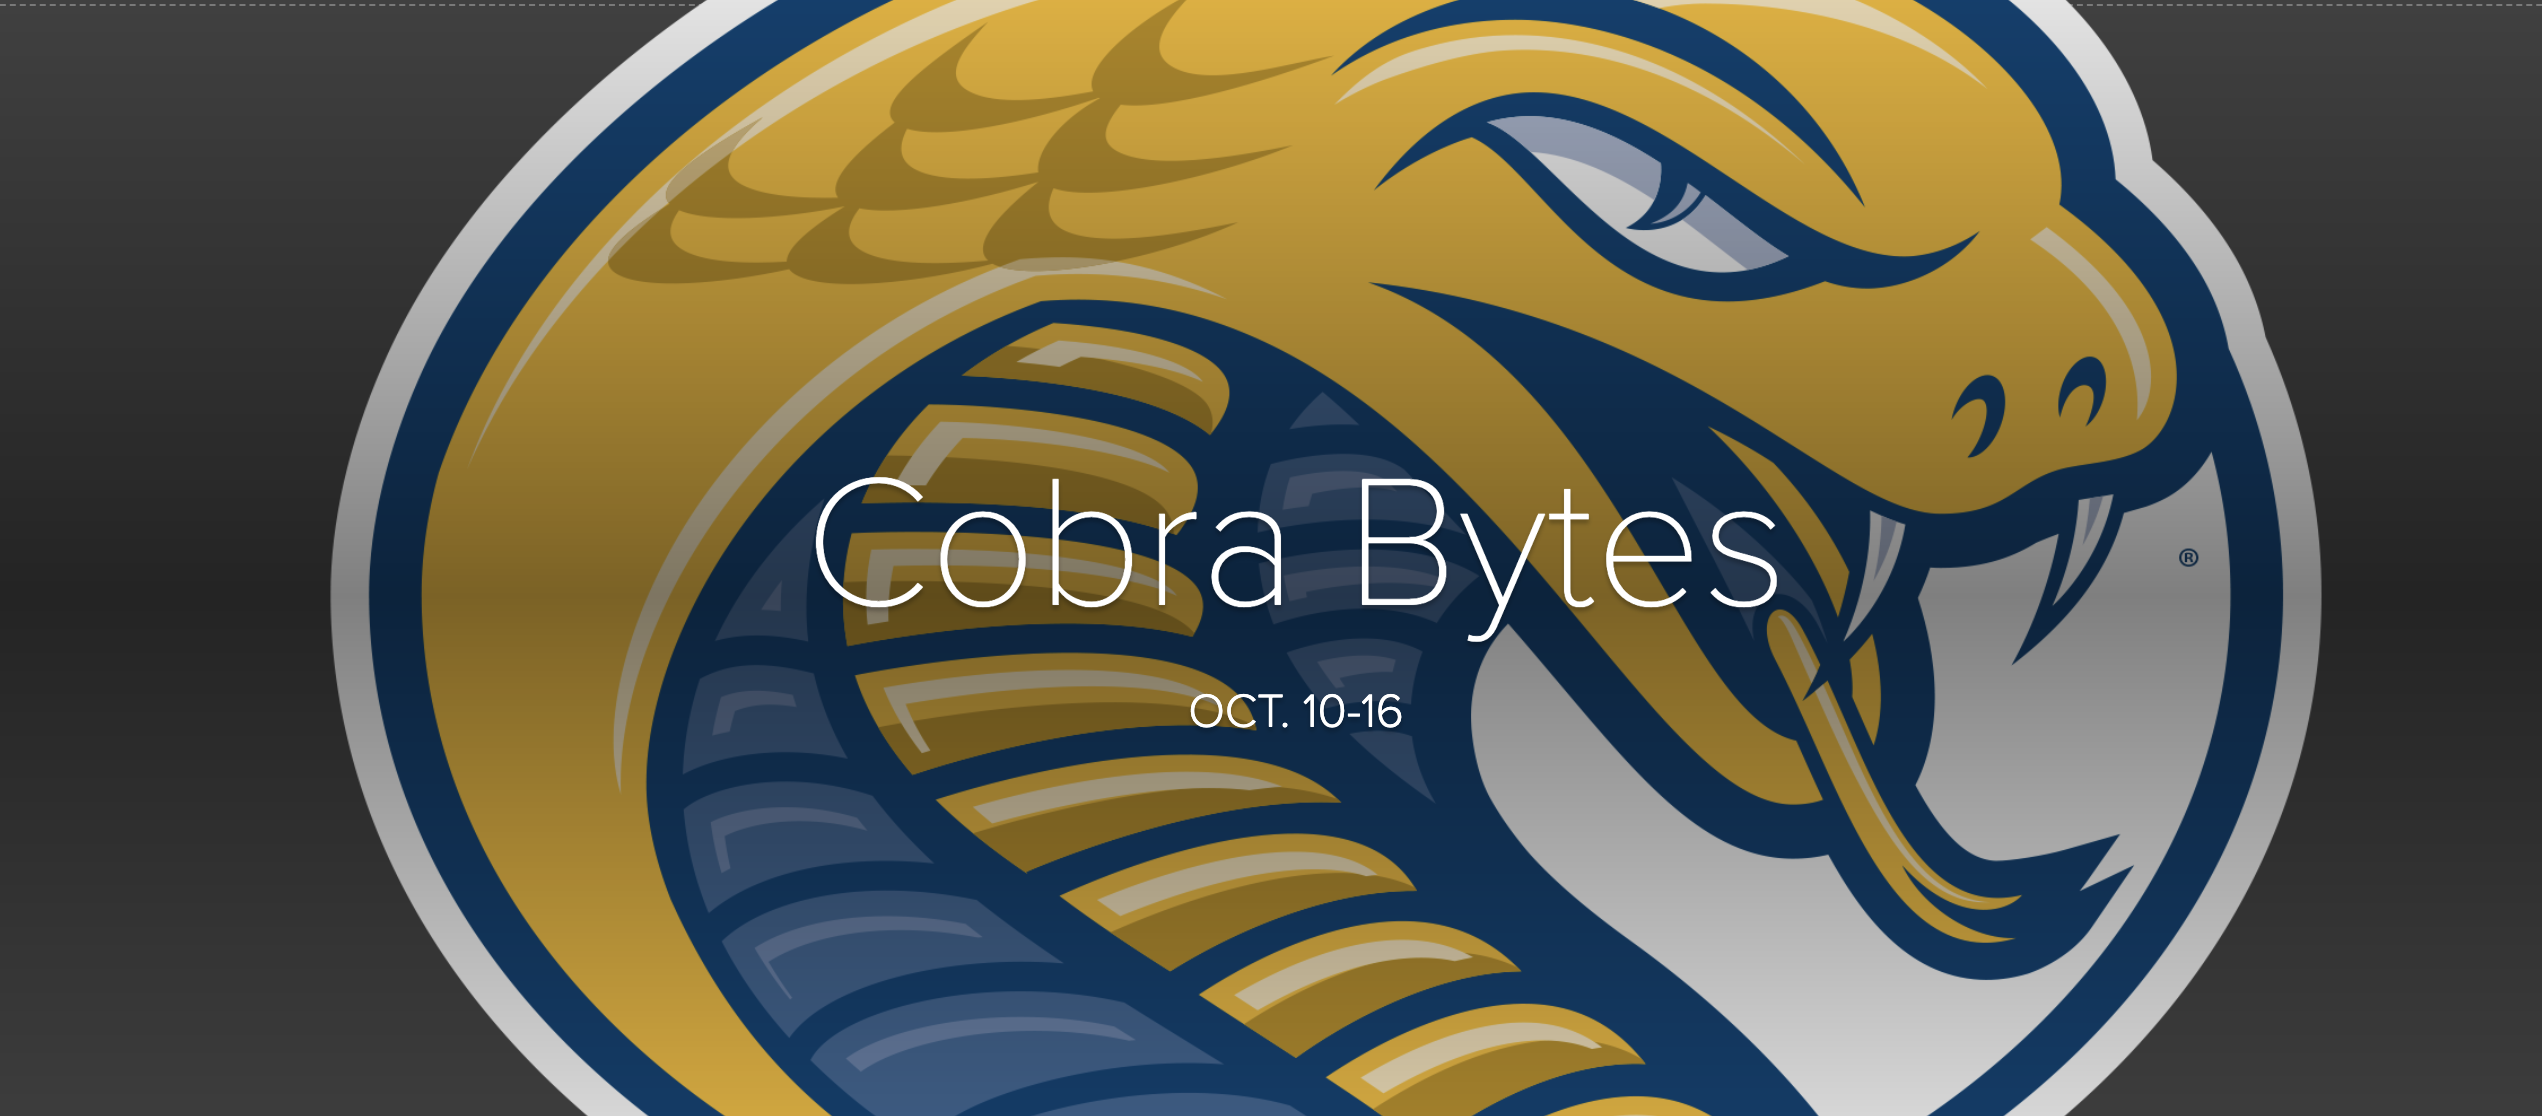 Cobra Bytes Oct. 10-16